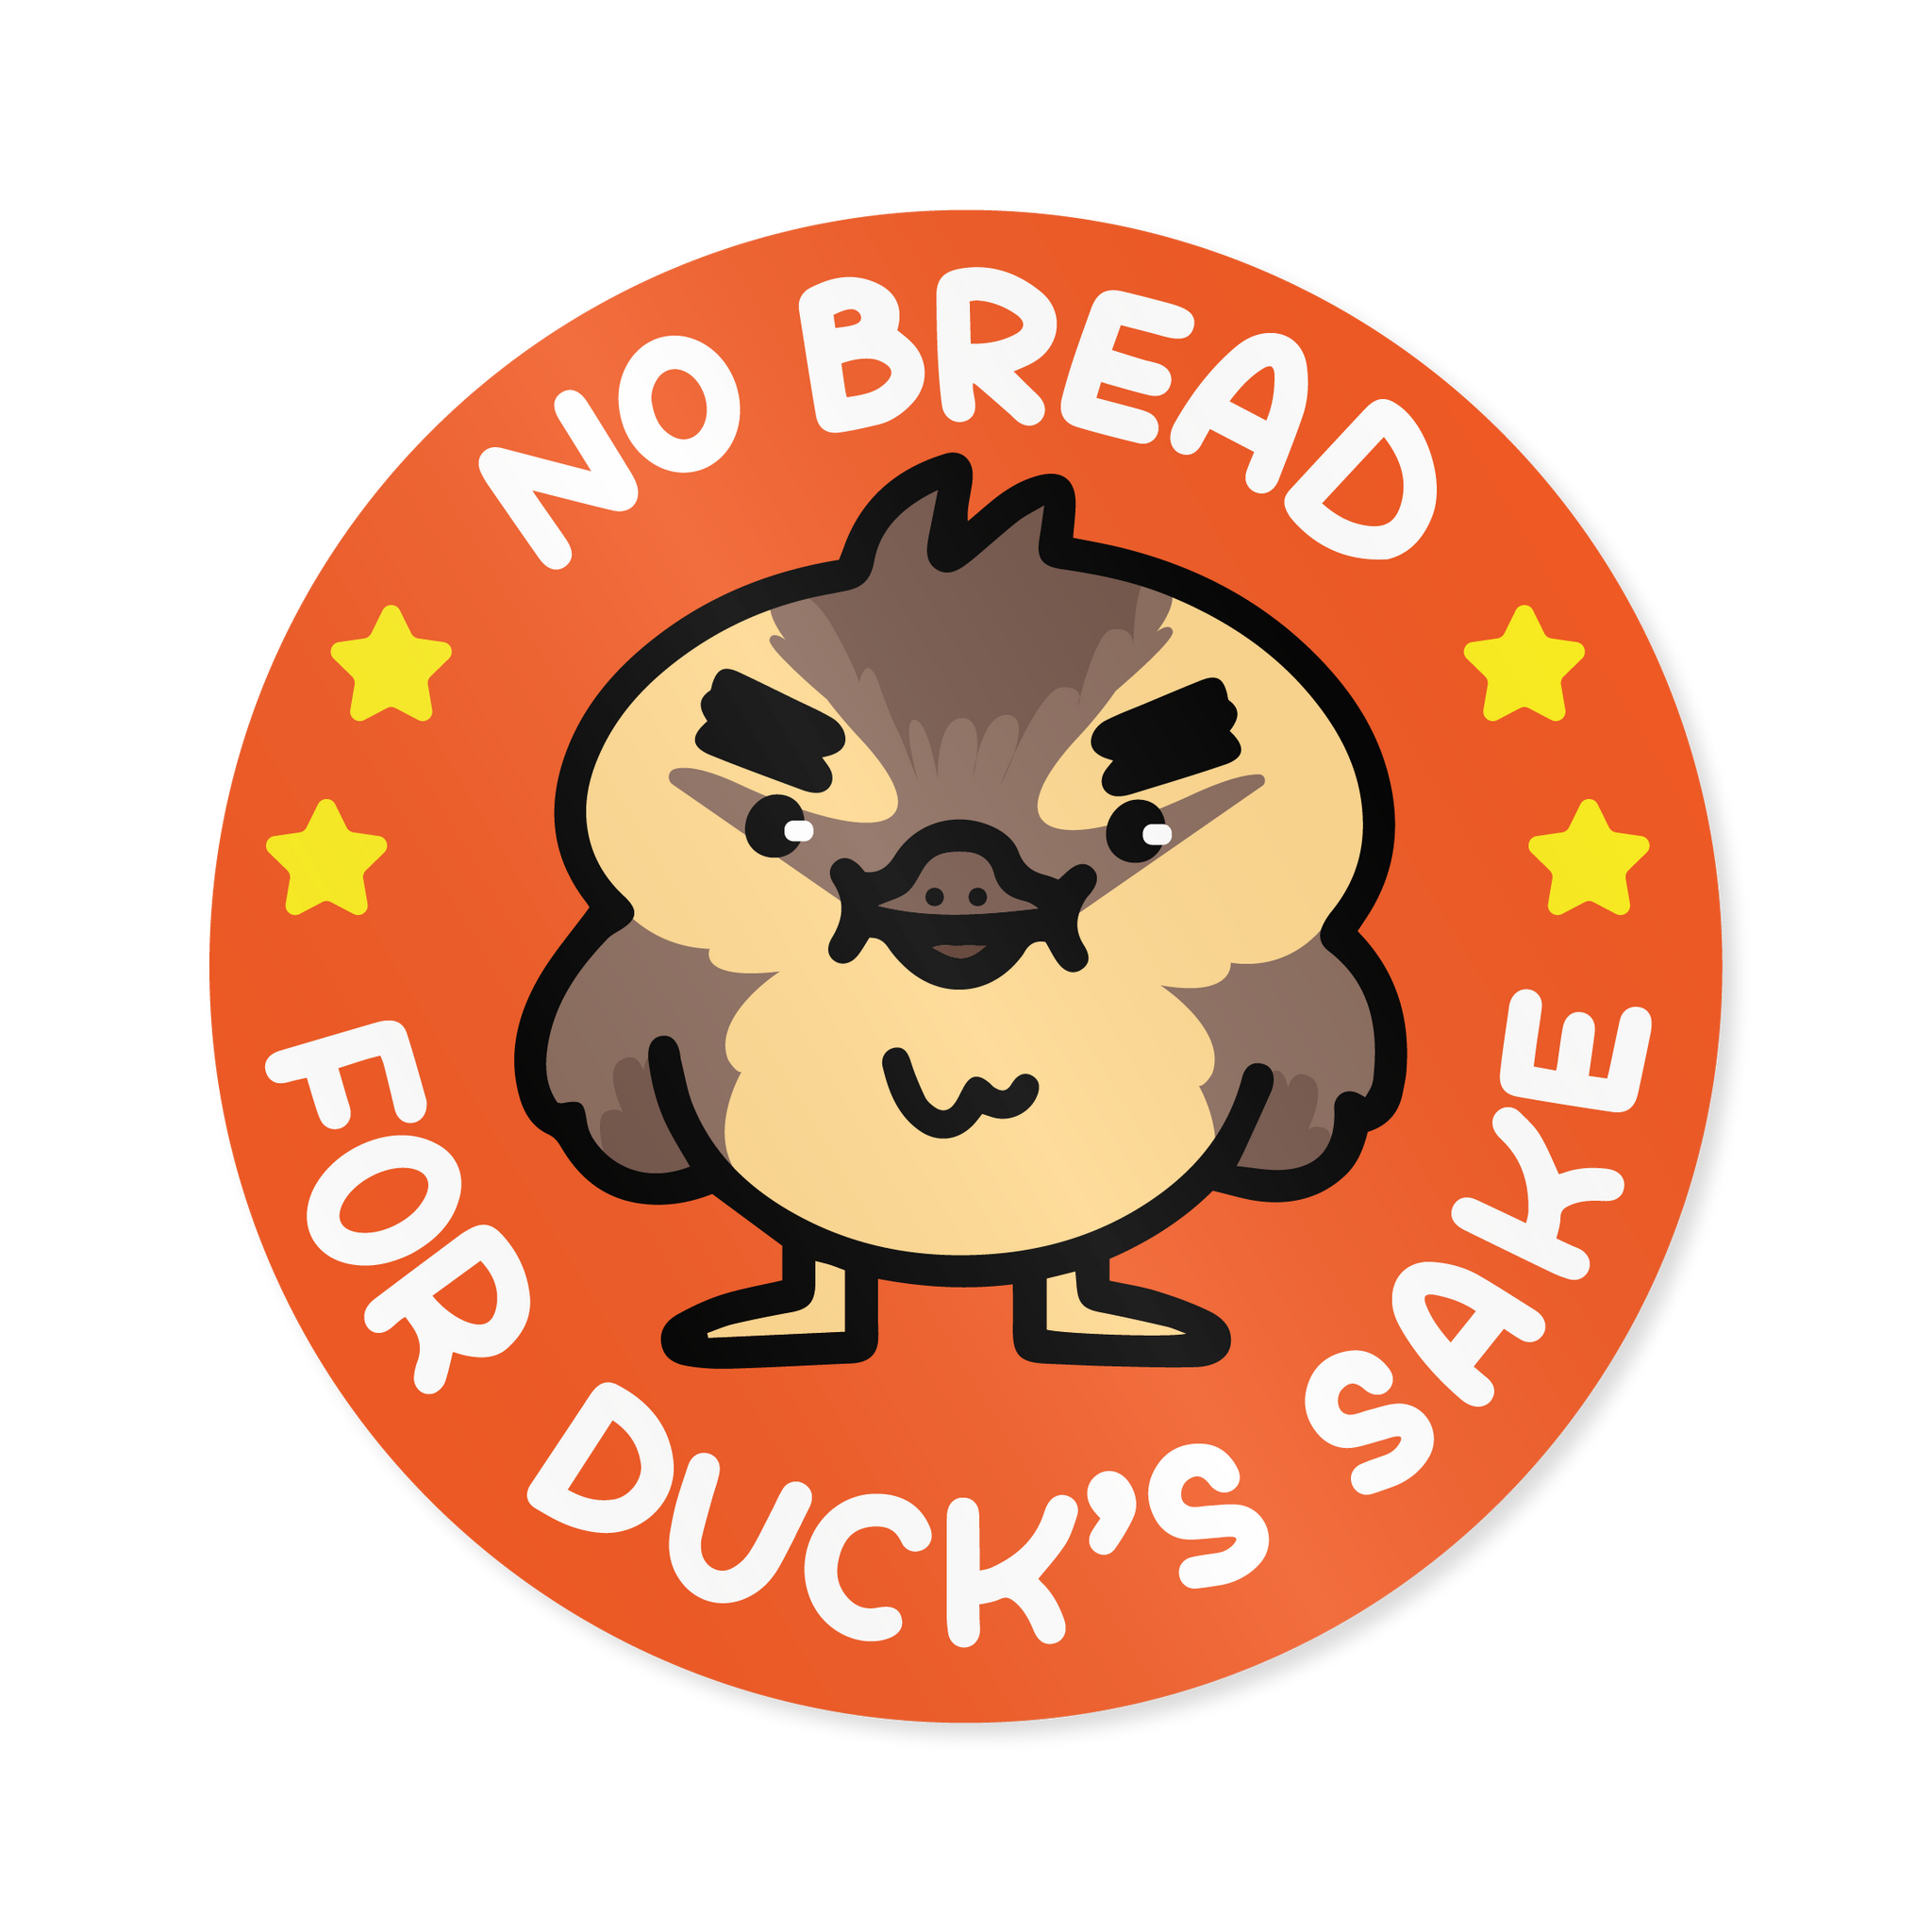 No Bread For Duck's Sake - Vinyl Sticker